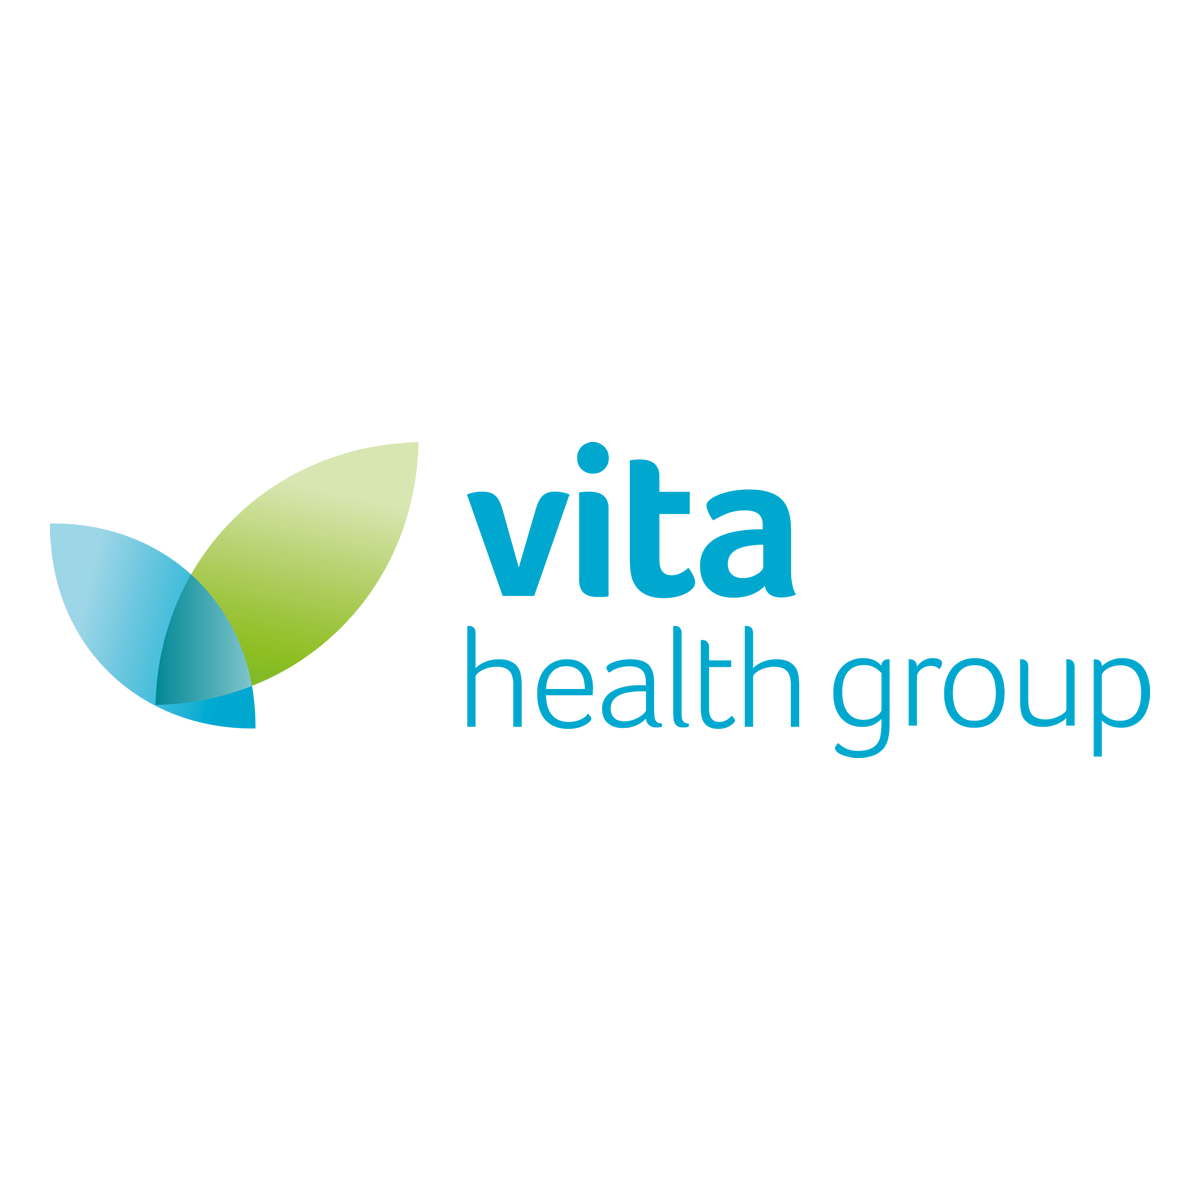 Vita health group 